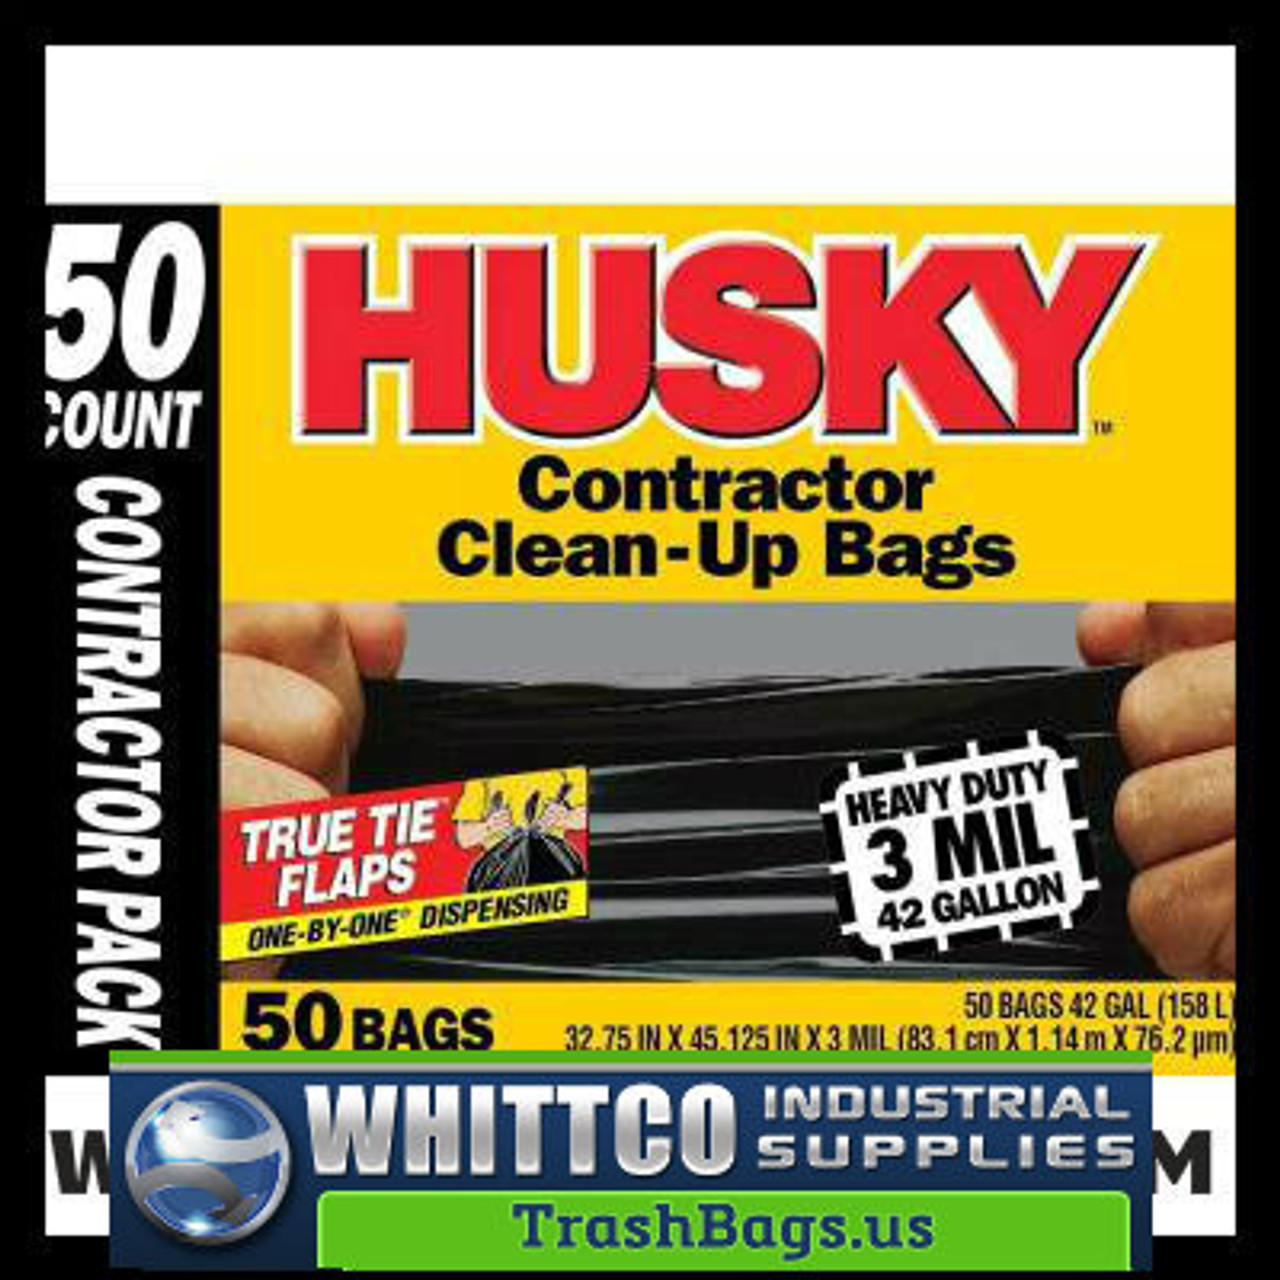 Contractor bags 42 gallon Husky 50 bags per case HK42WC050B